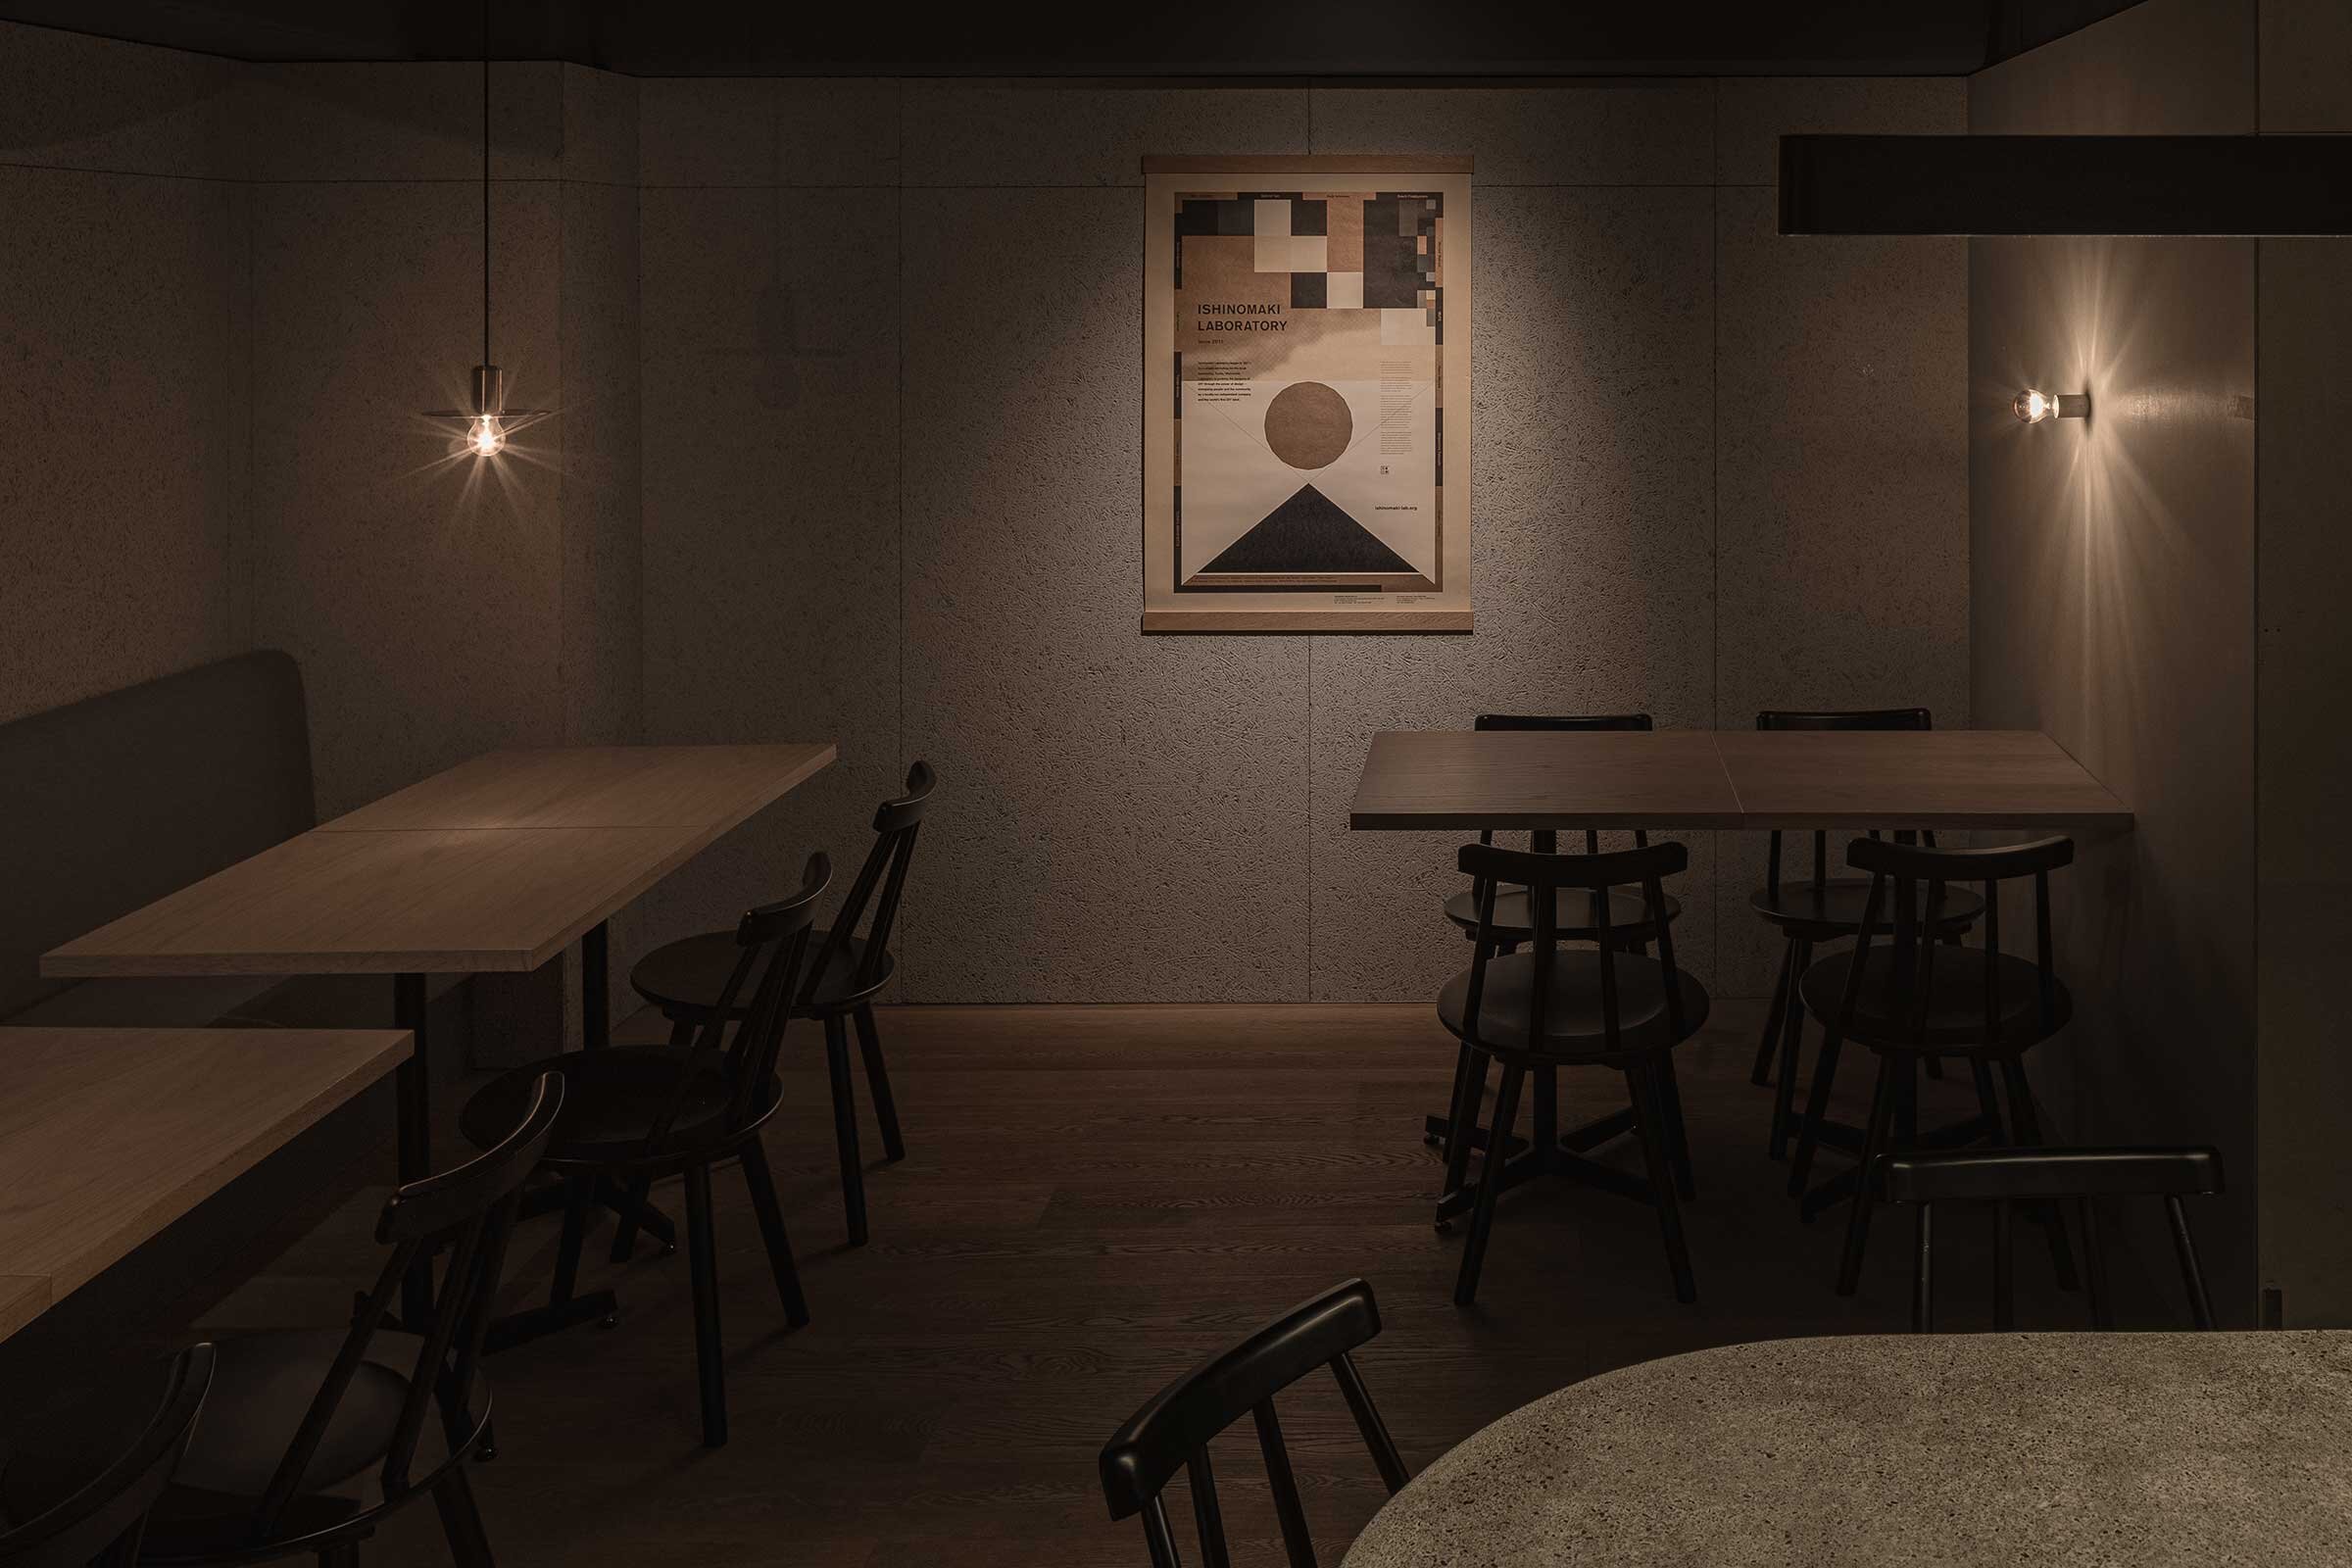 Grillno Restaurant | Designed by Keiji Ashizawa | Softer Volumes